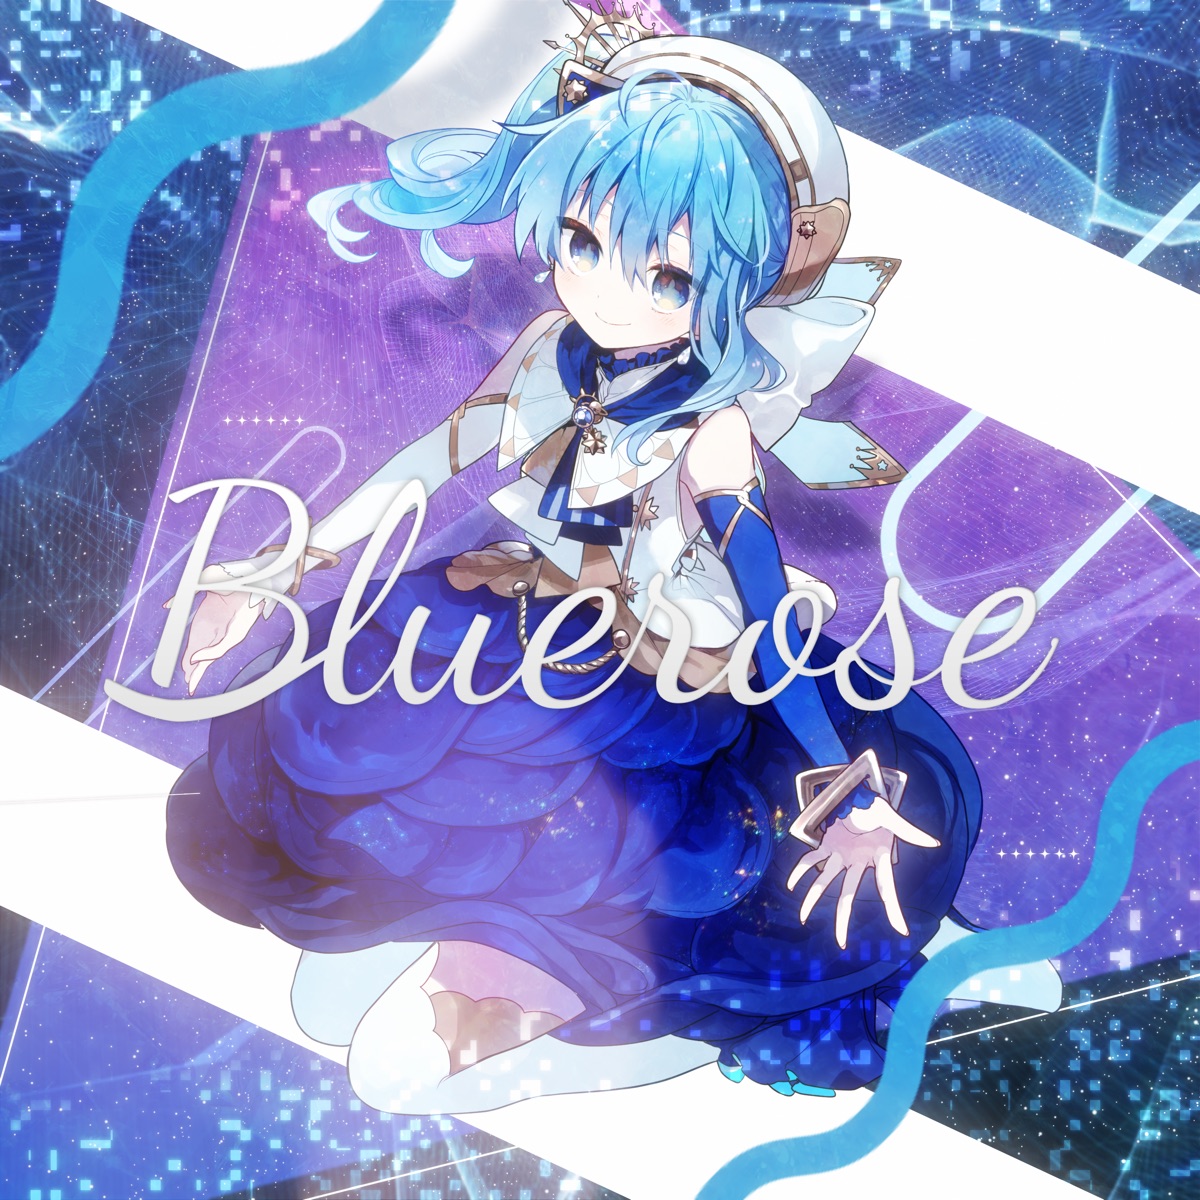 Cover for『Hoshimachi Suisei - Bluerose』from the release『Bluerose / comet』